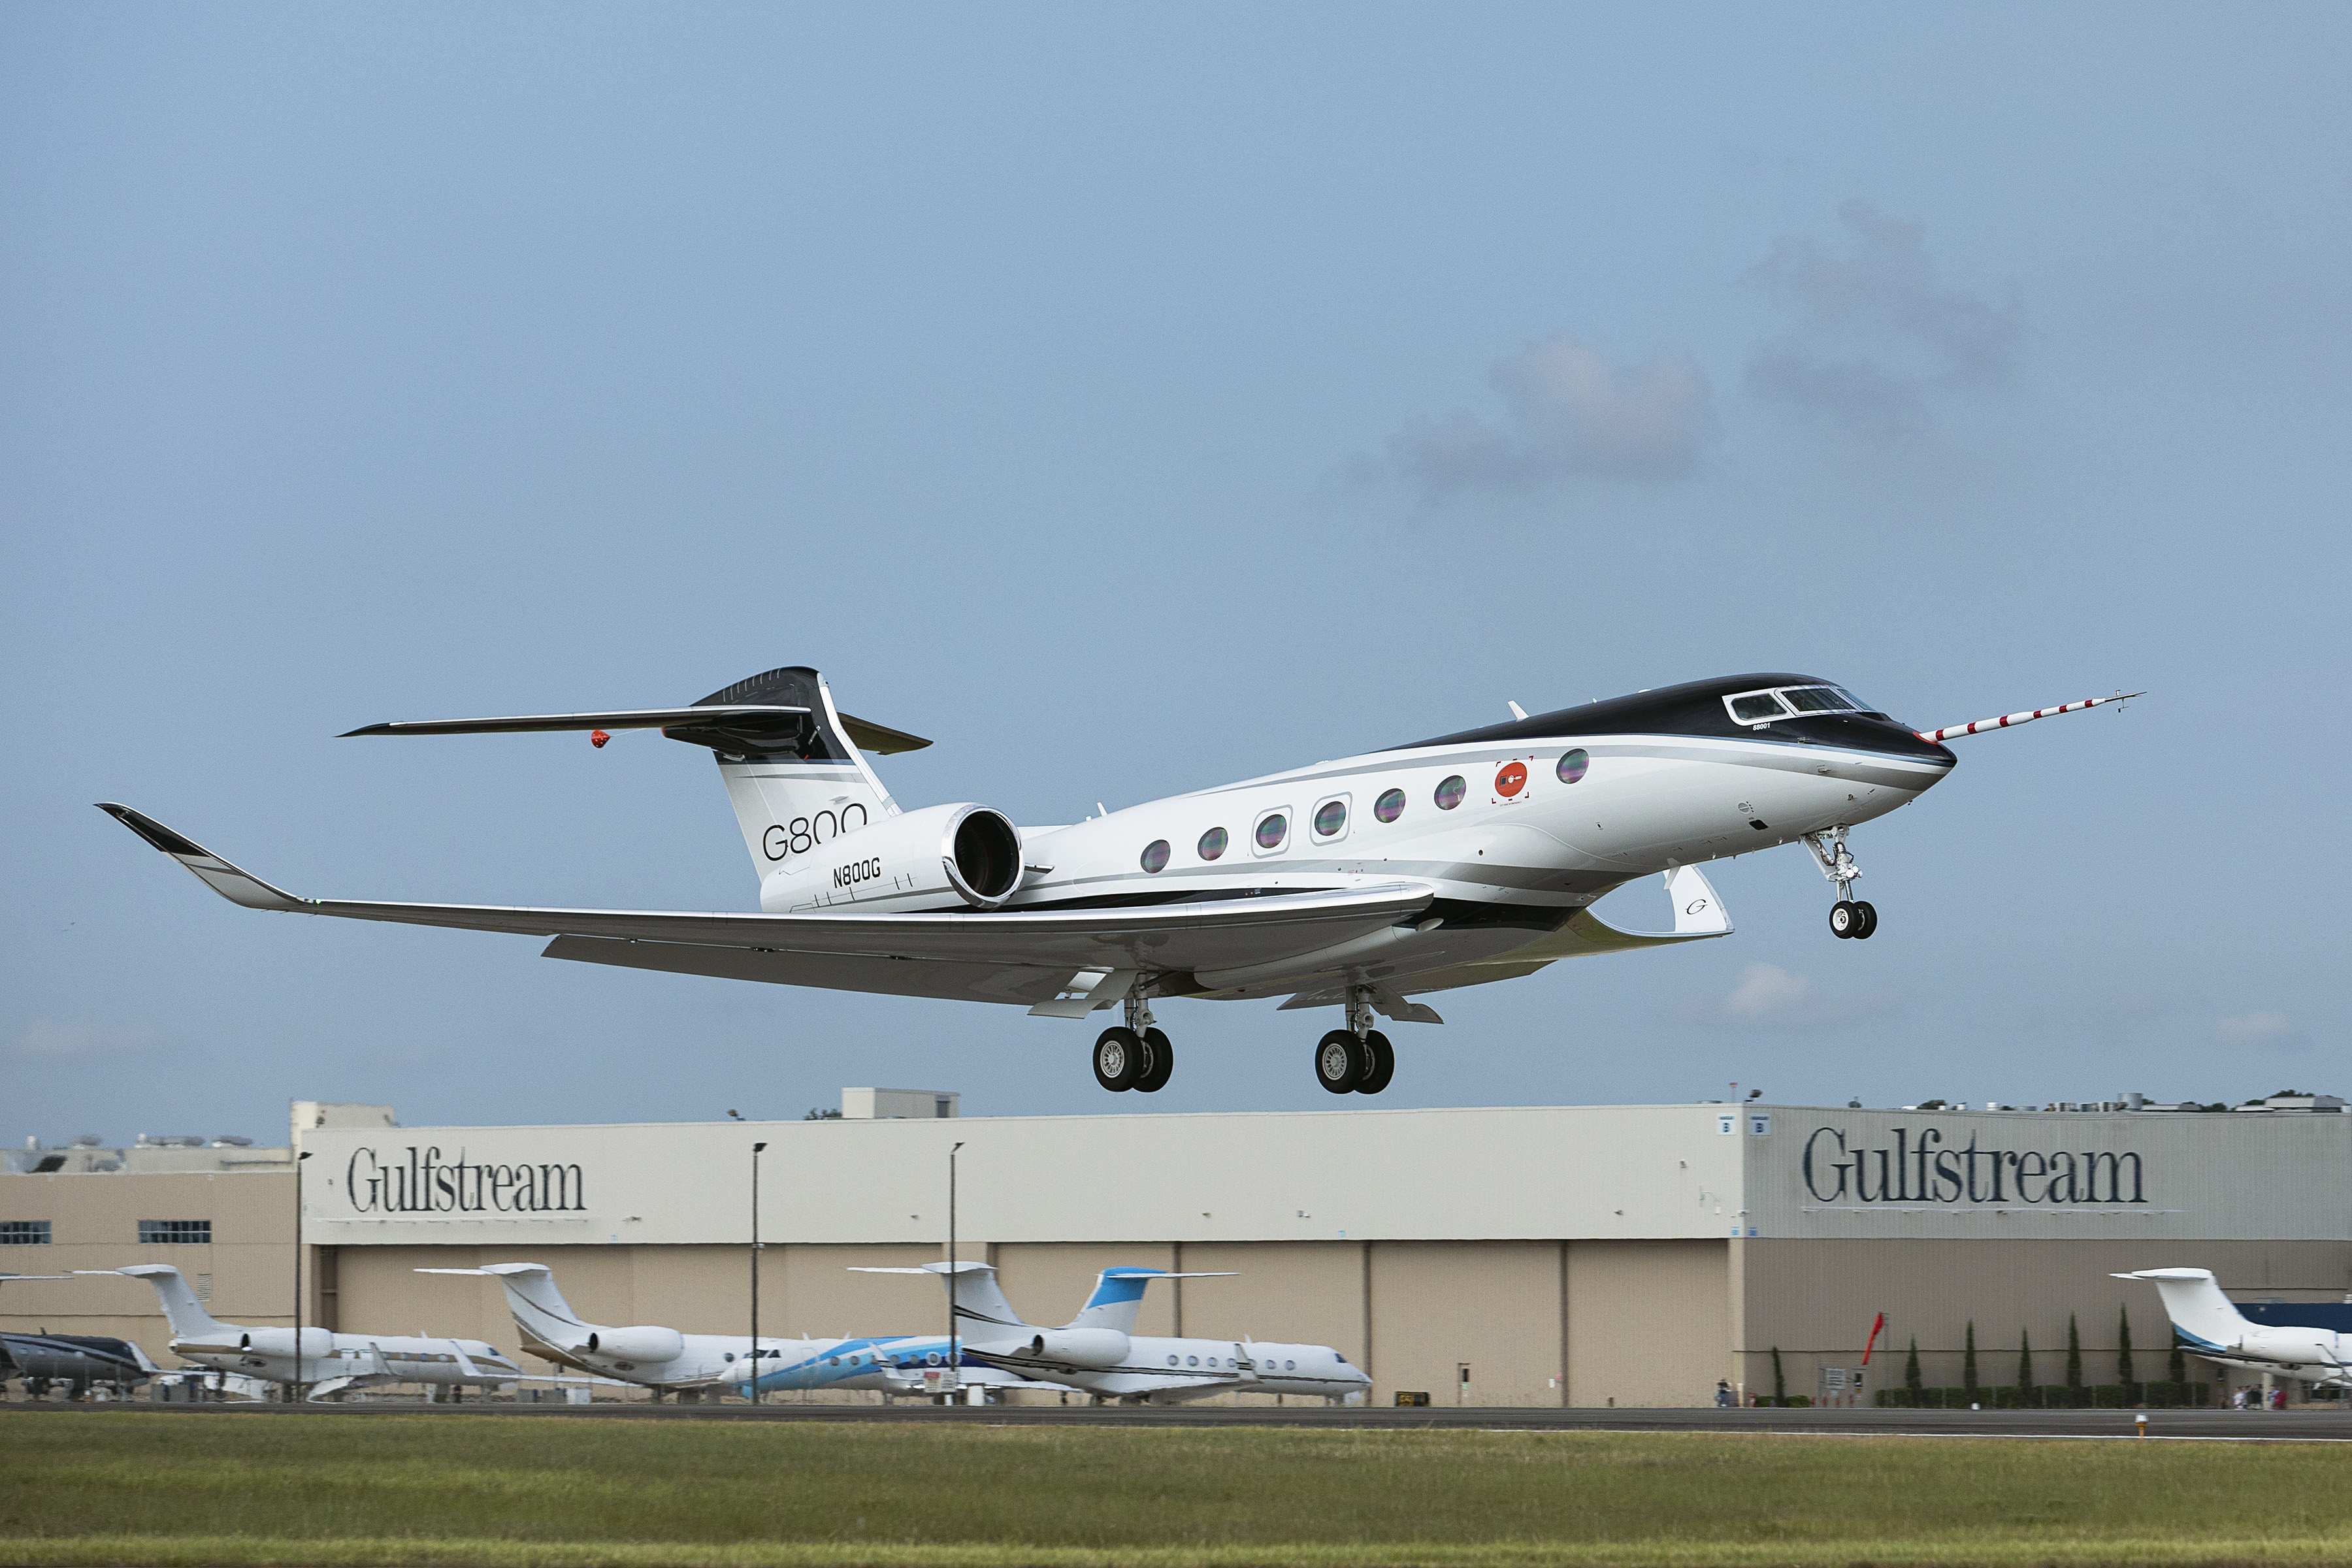 Gulfstream G800 First Flight